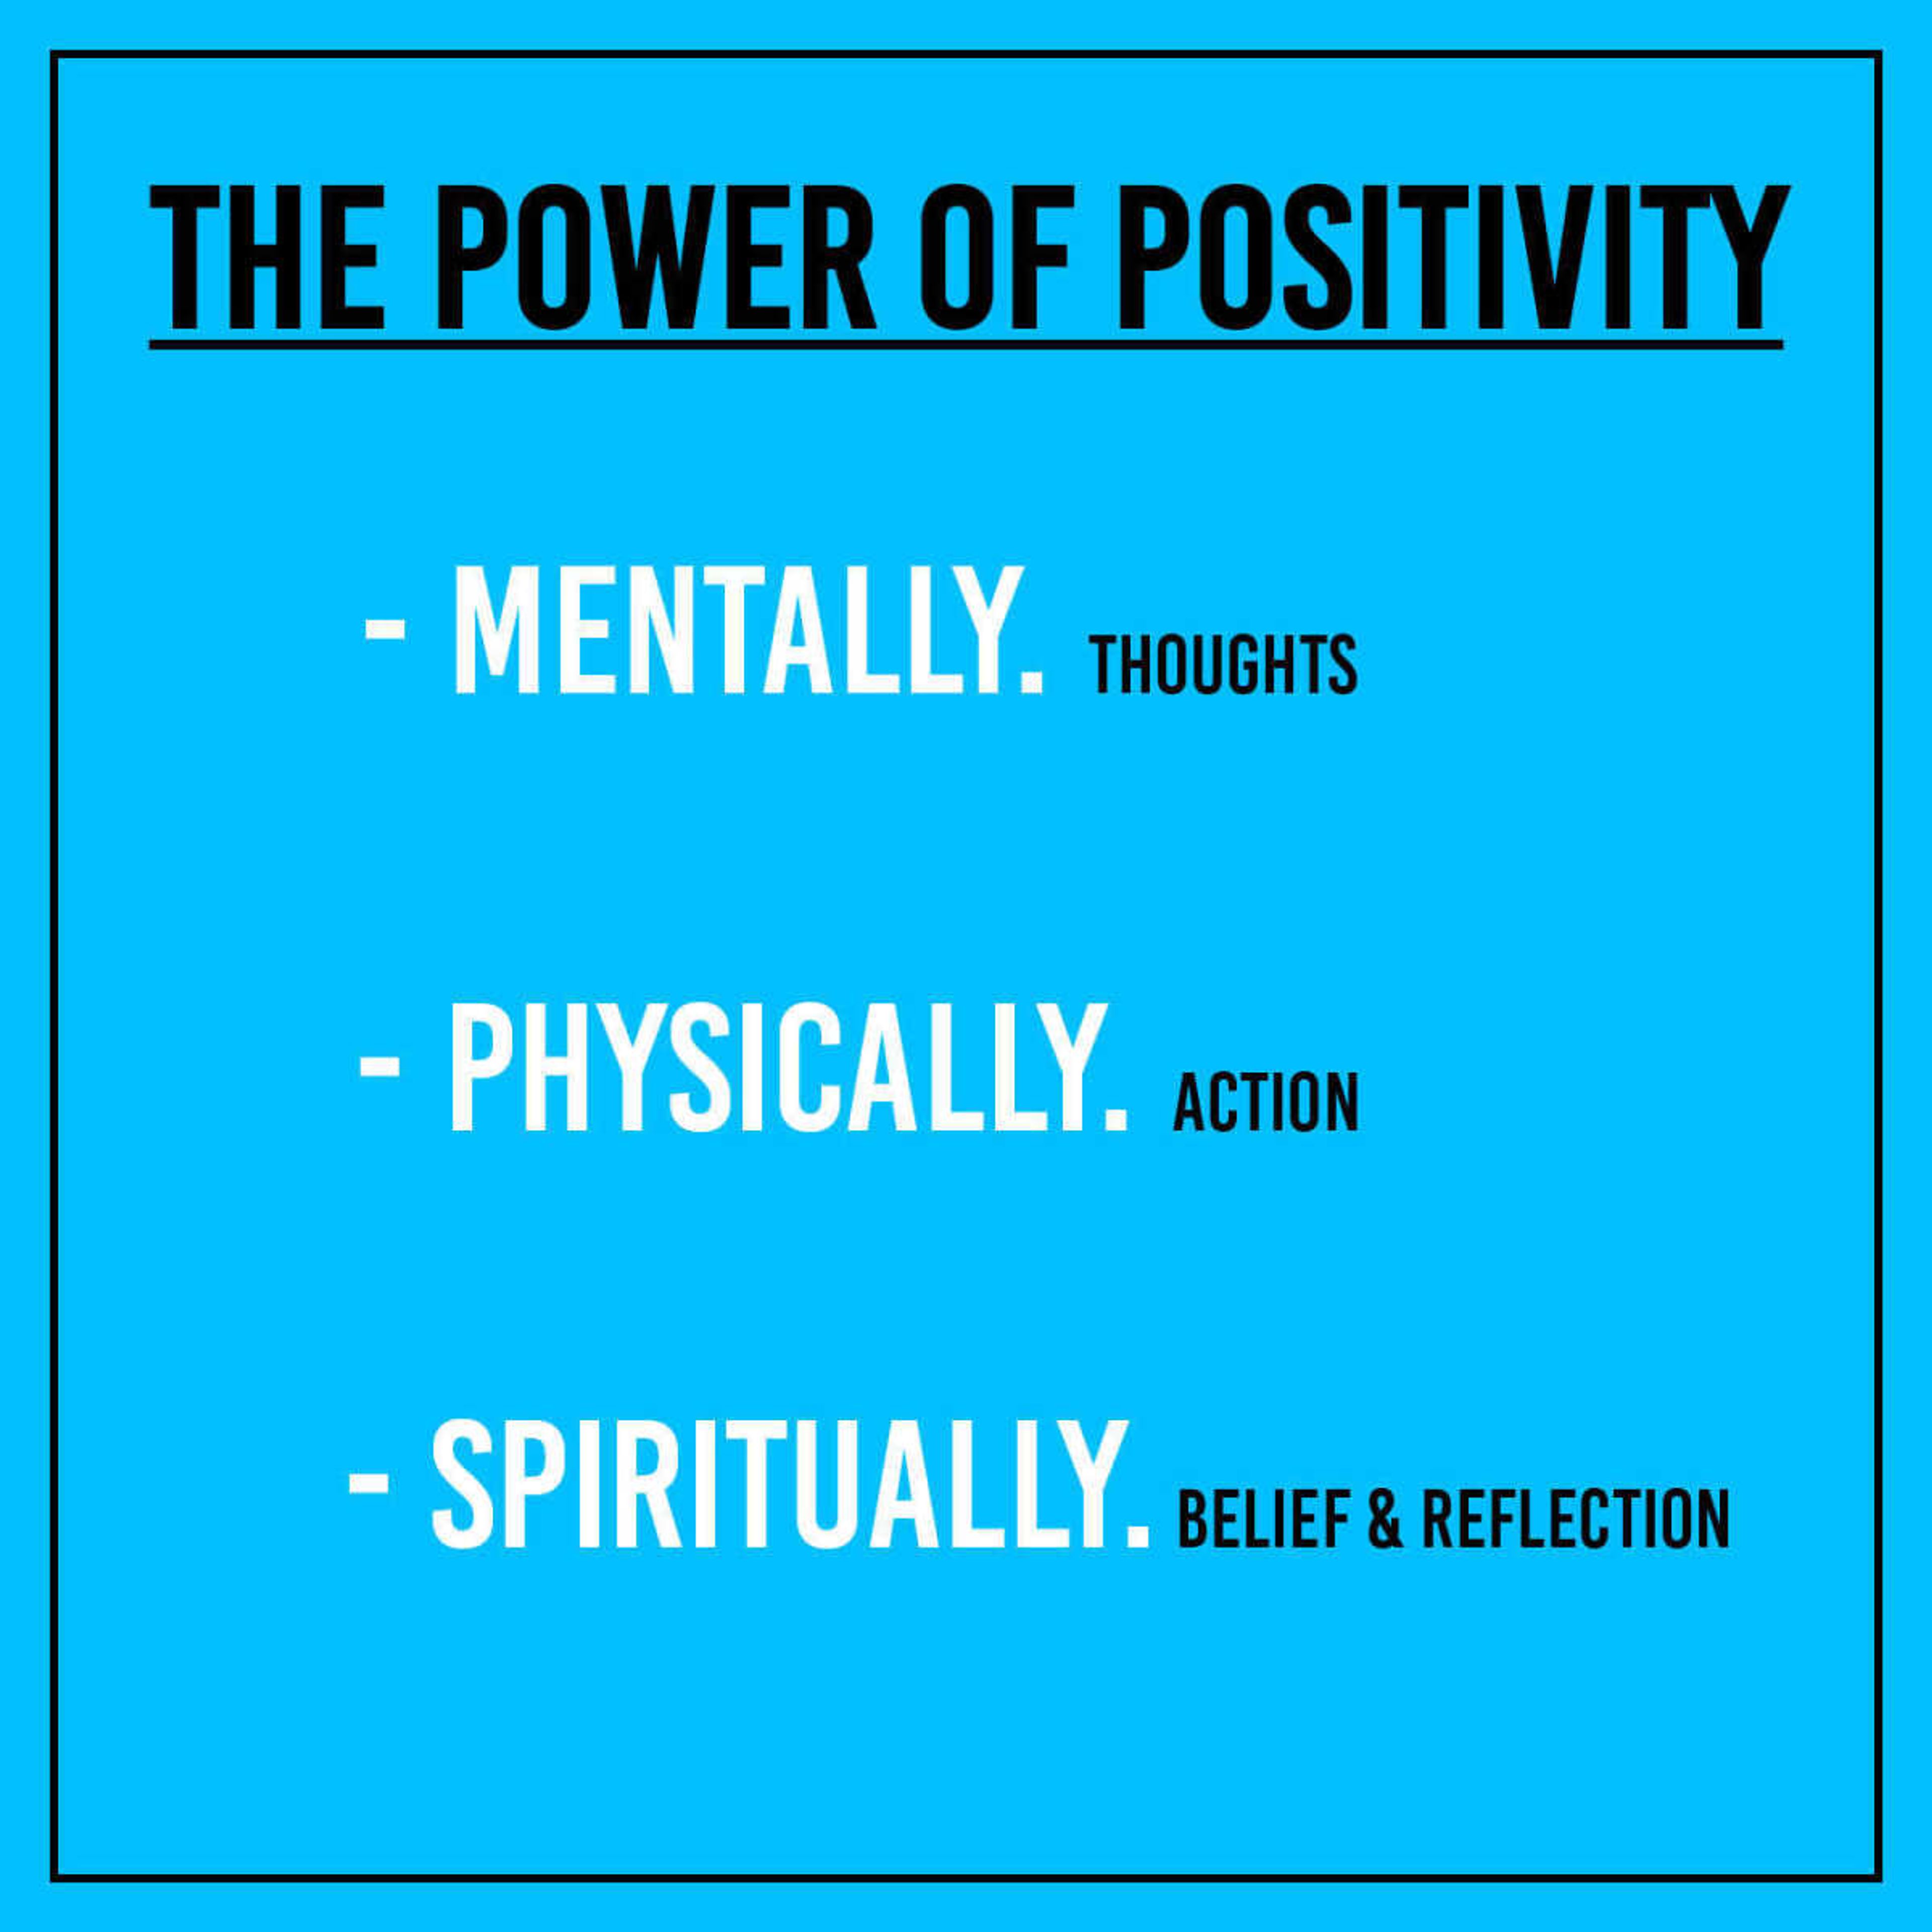 The power of positivity: mentally, physically, spiritually